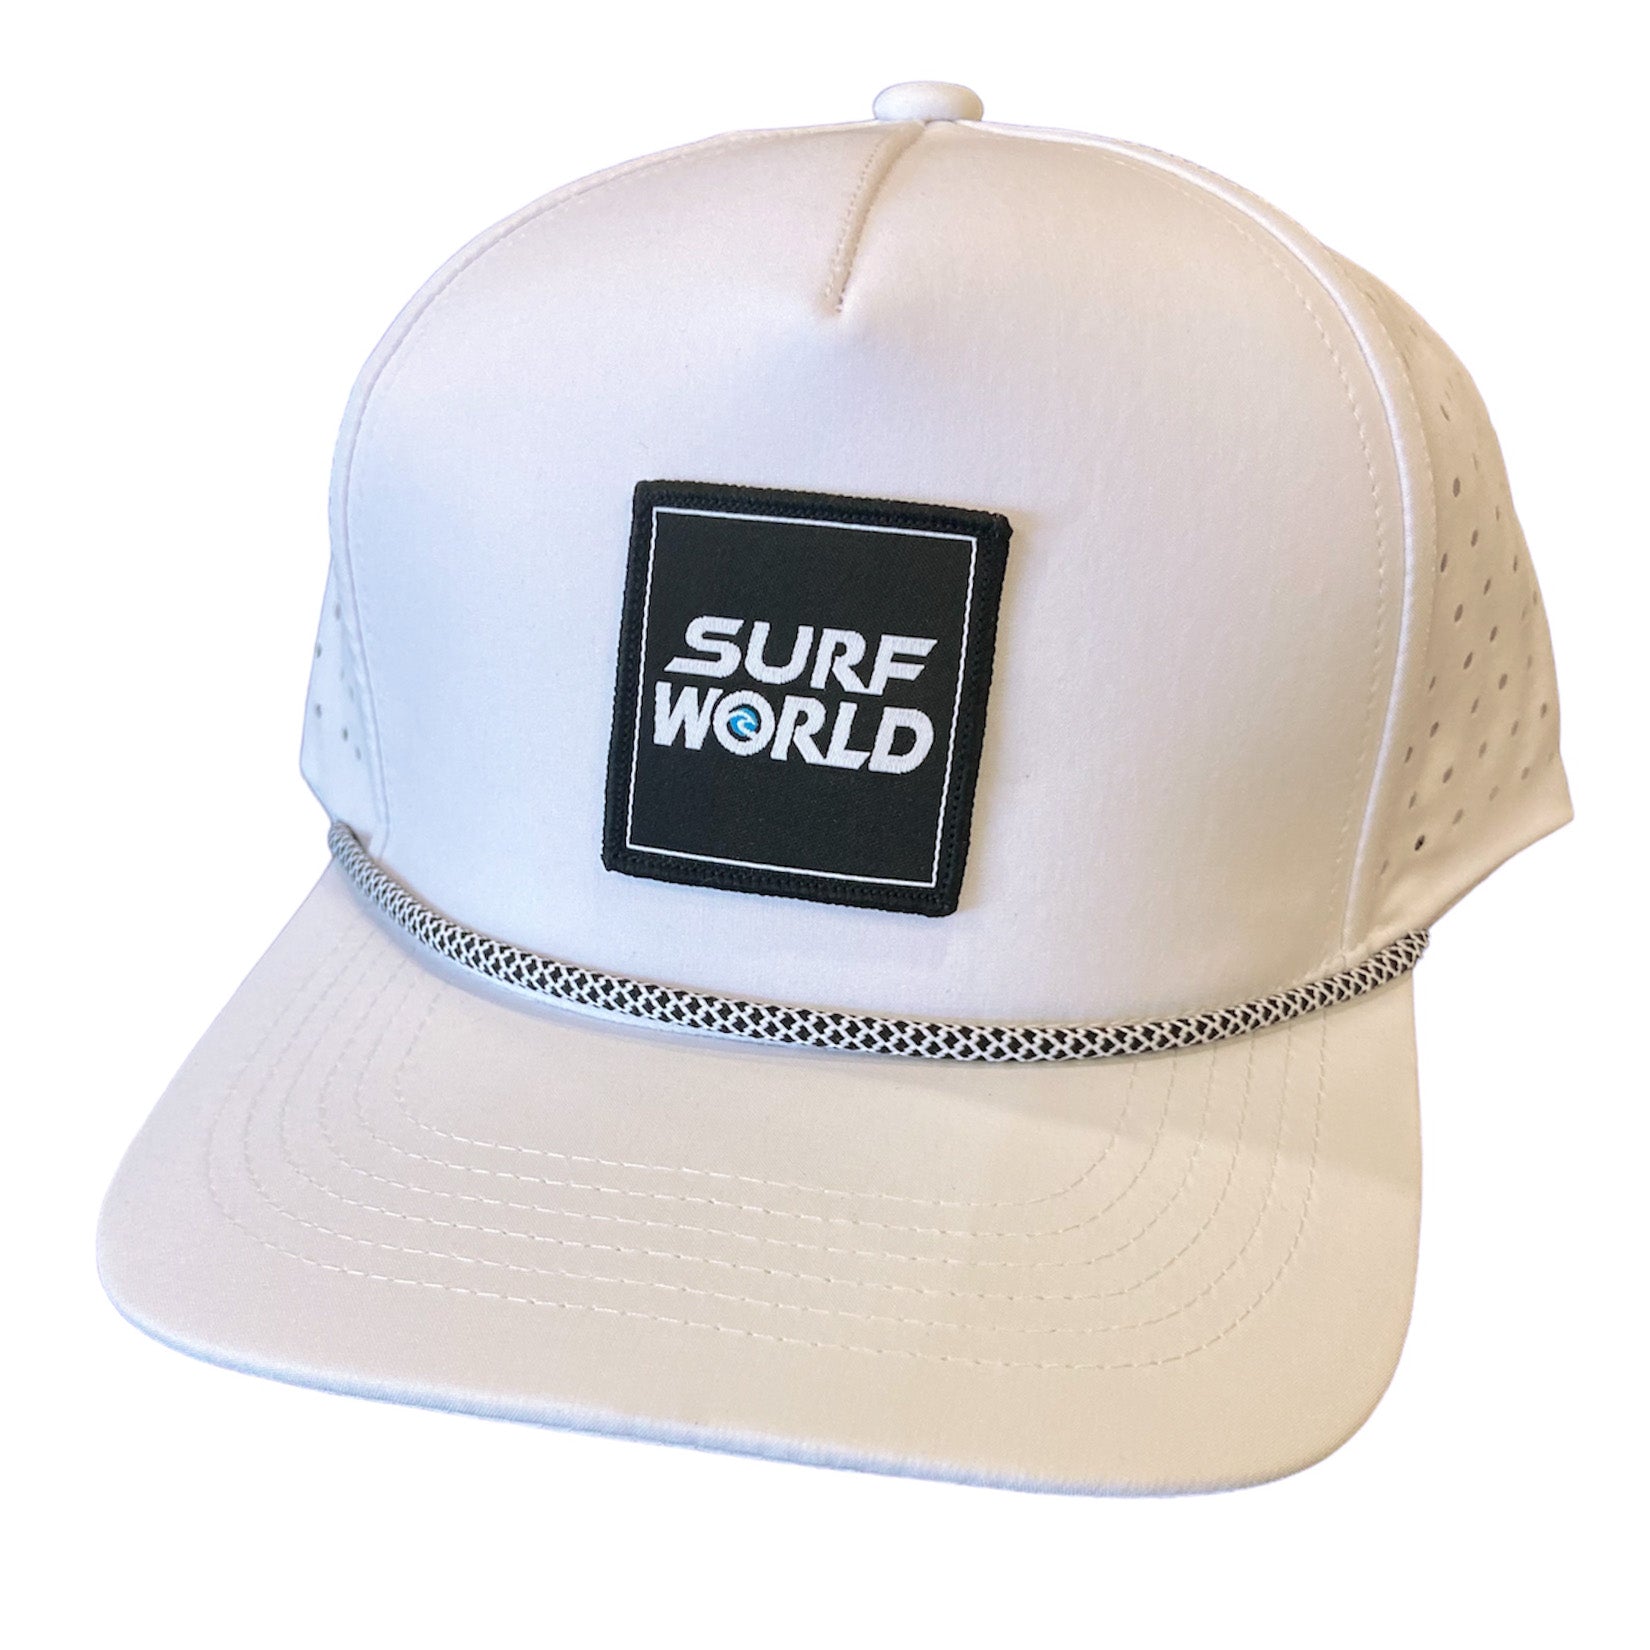 Surf World Performance Snap Back Hat - Black / Grey / White Hats White Black Box